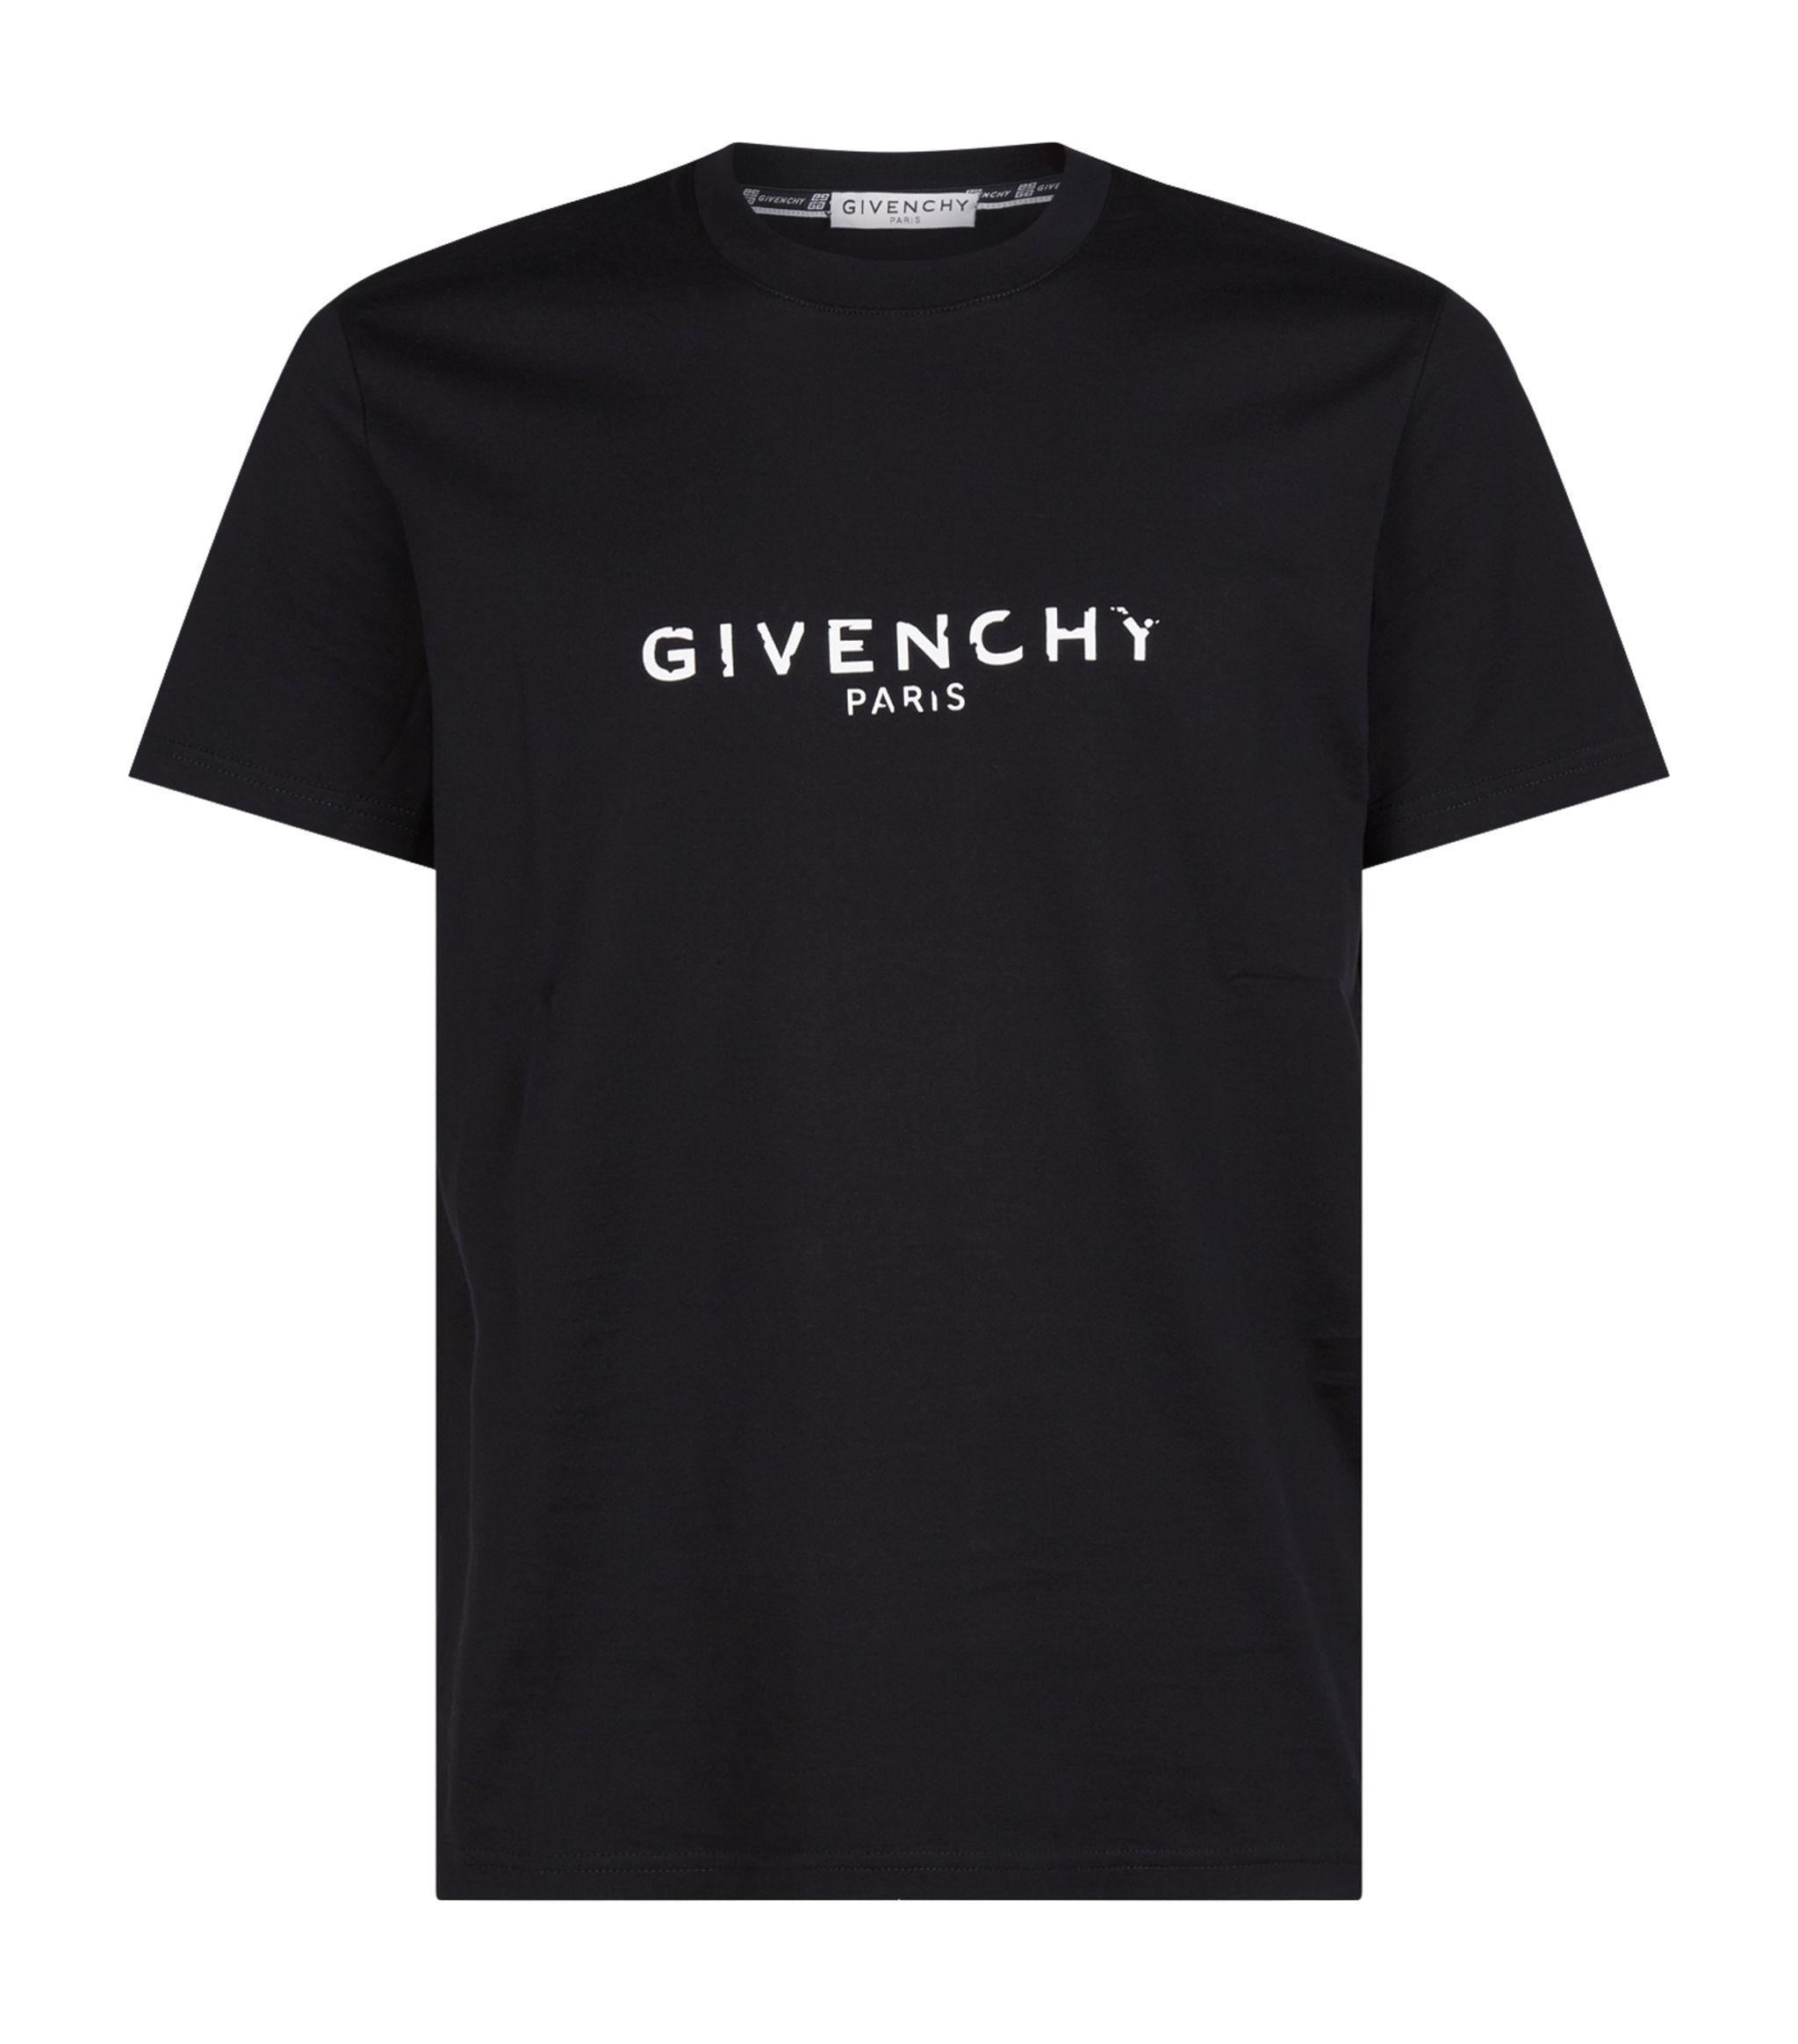 Givenchy Cotton Vintage Logo T-shirt in Black for Men - Lyst